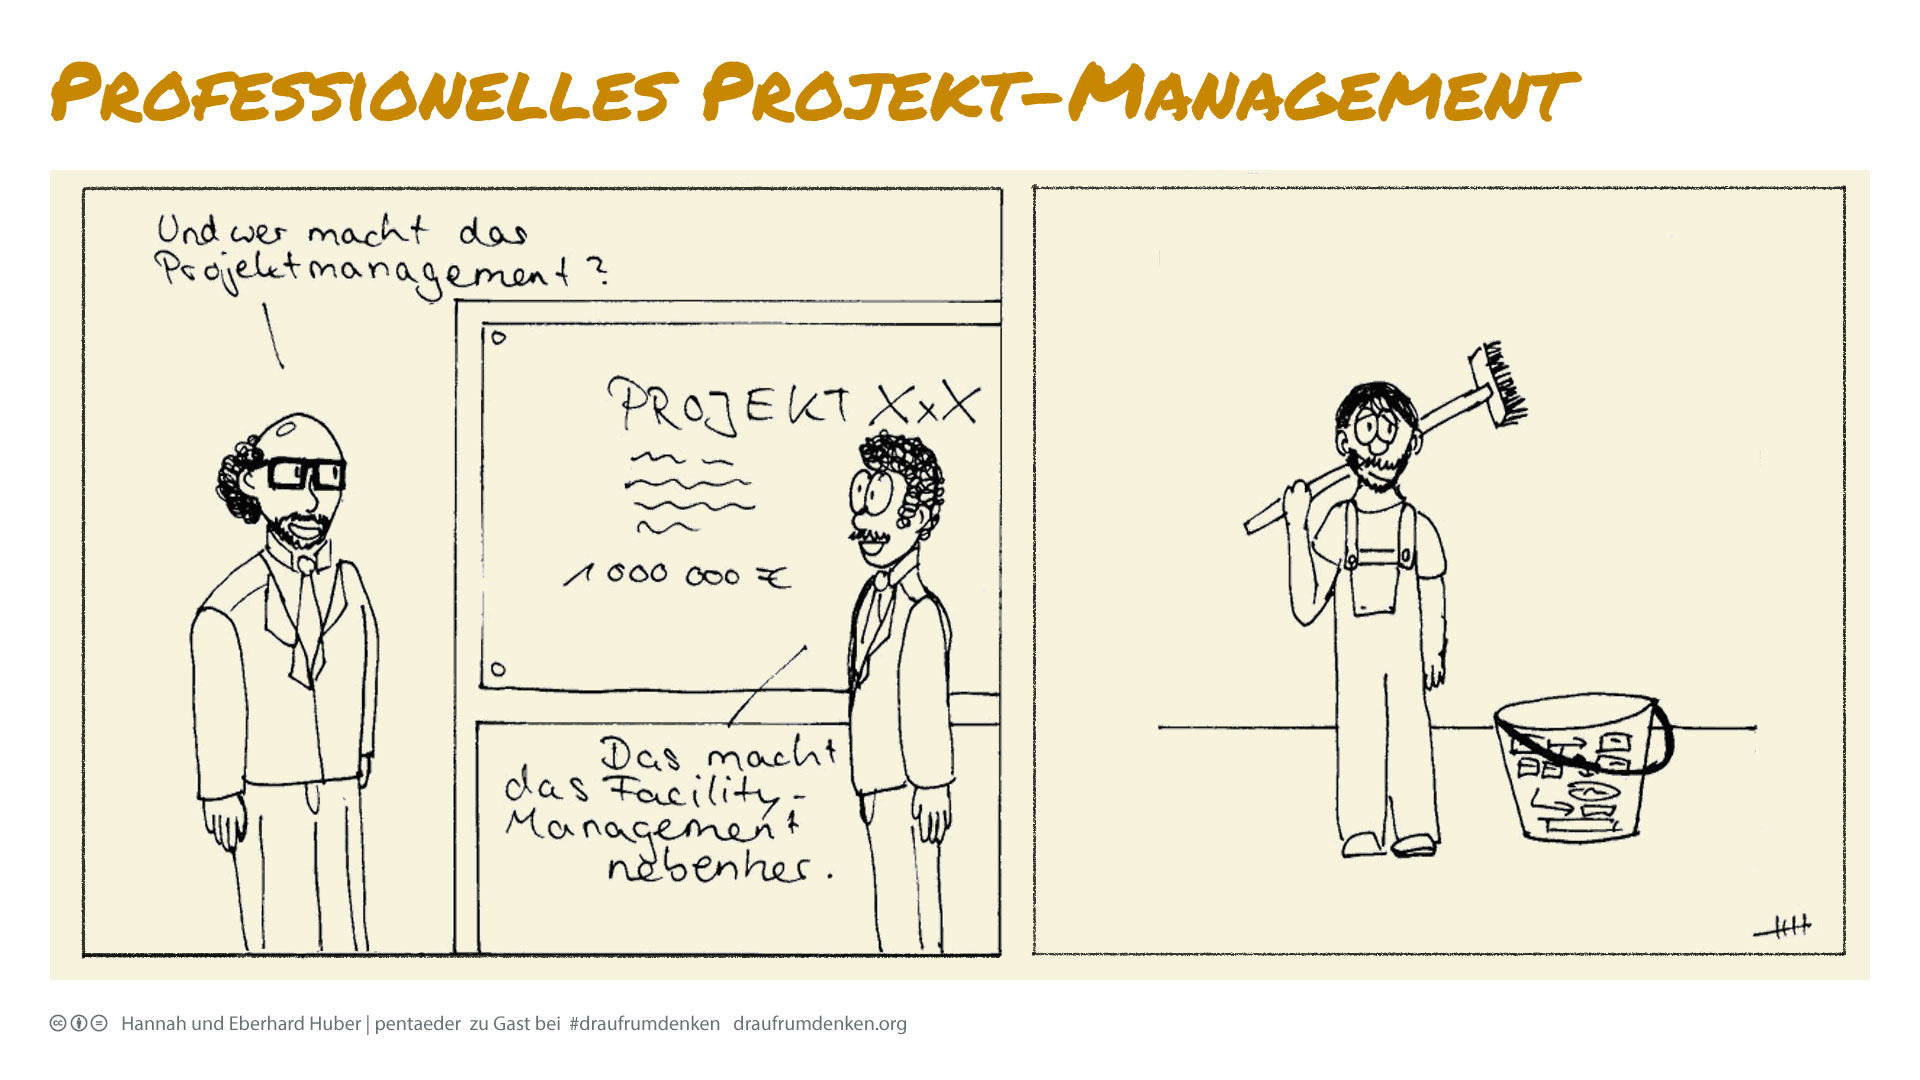 draufrumdenken: Professionelles Projekt-Management. Bild: cc Eberhard & Hannah Huber | pentaender